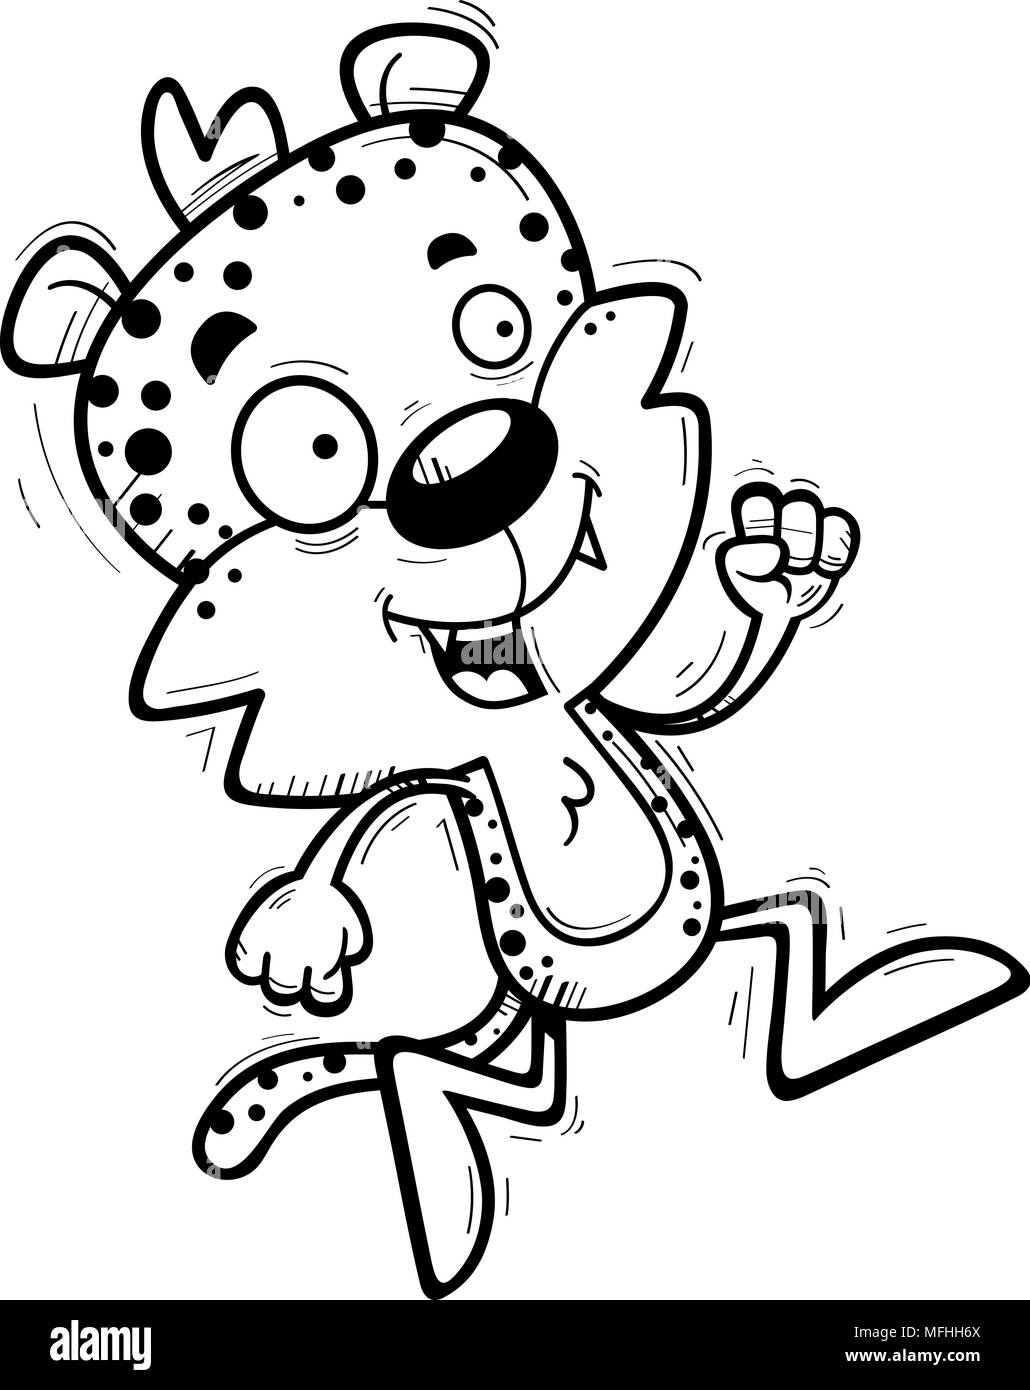 A cartoon illustration of a male leopard running. Stock Vector